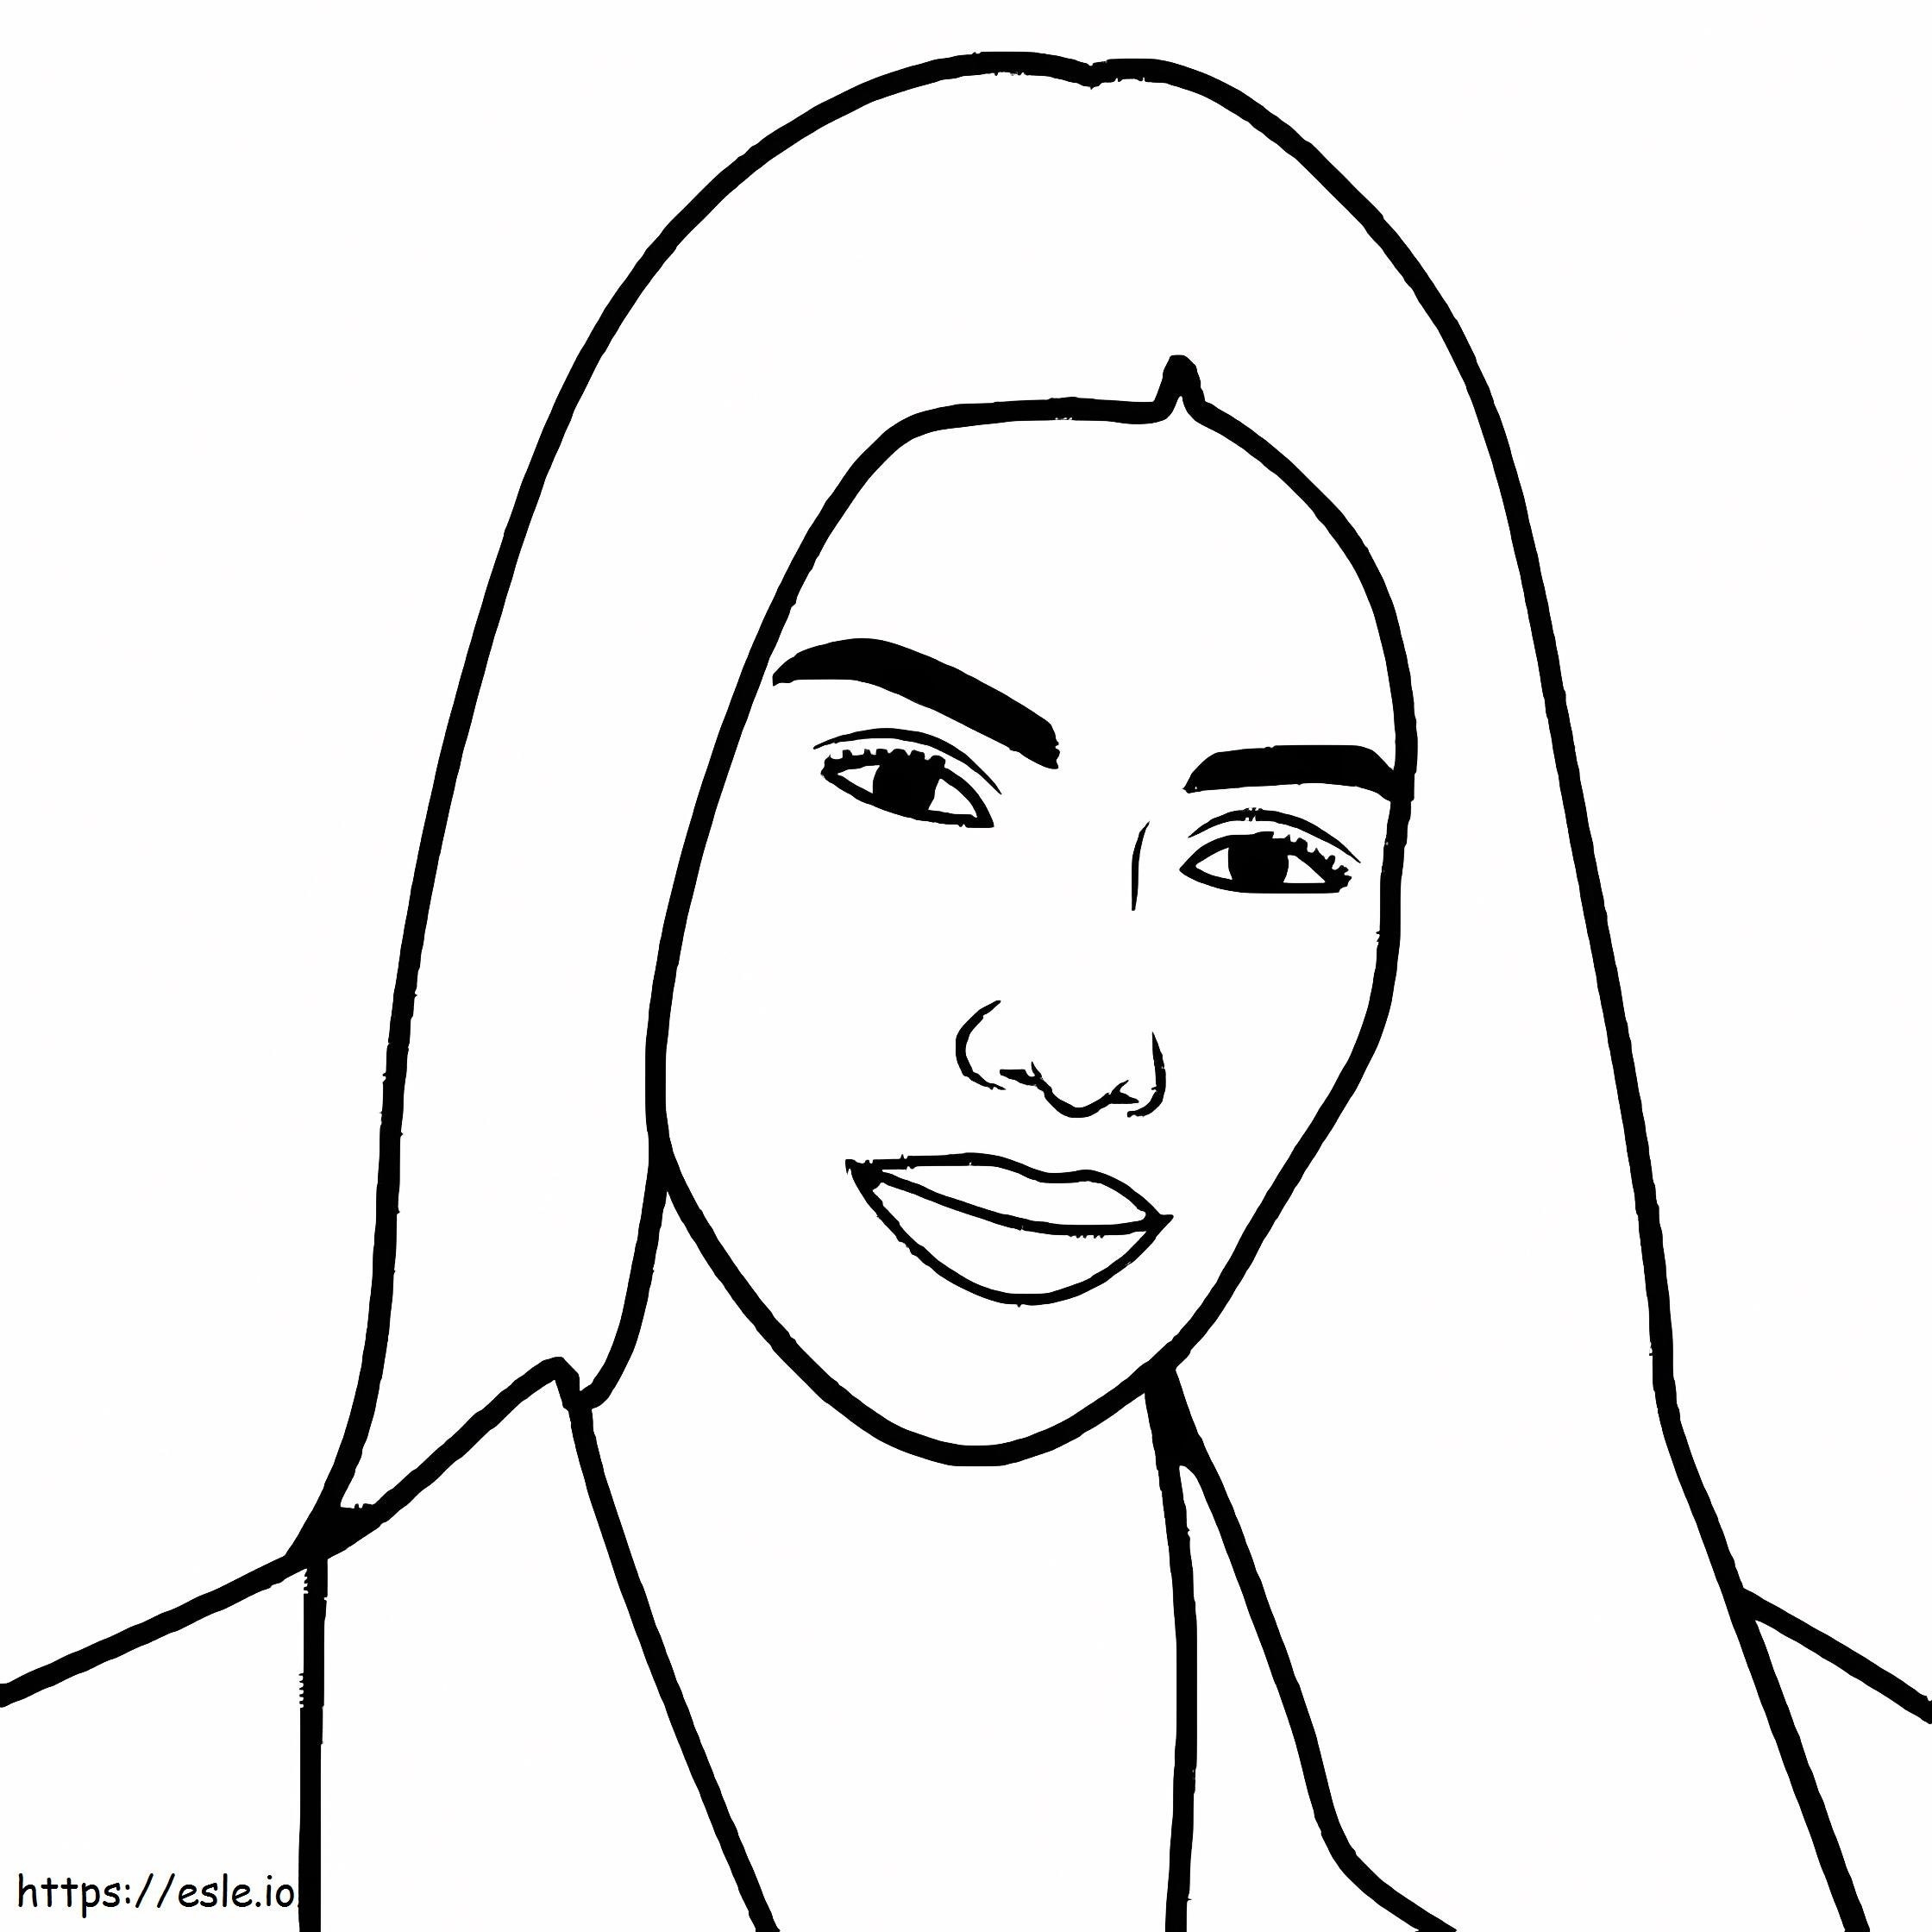 Kim Kardashian'ın Yüzü boyama